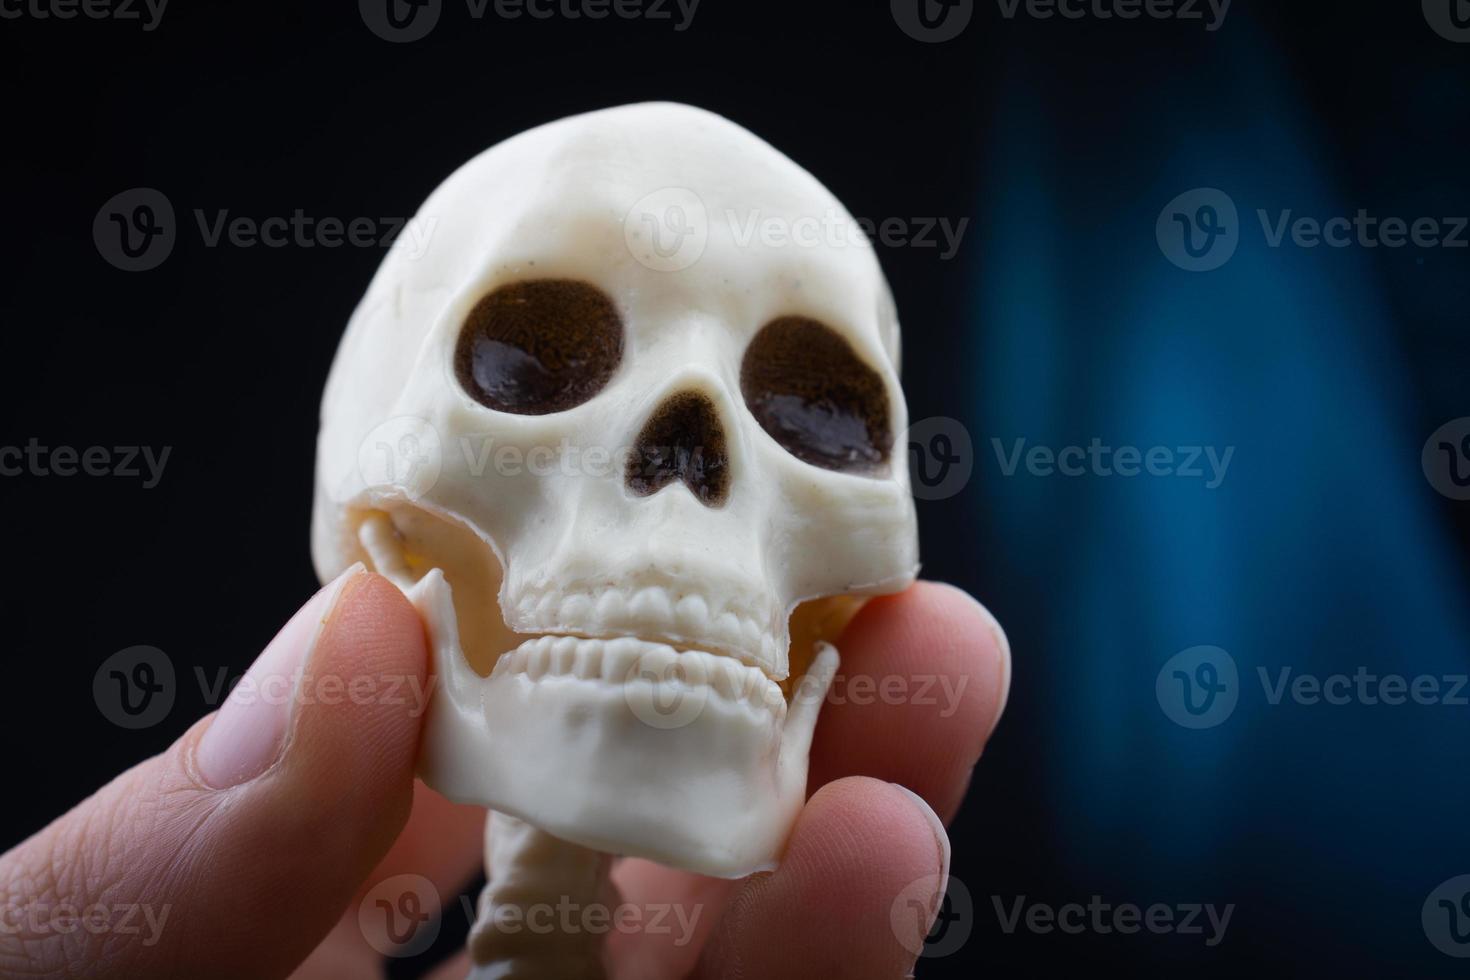 Human skeleton skull model in hand posing for medical anatomy science photo